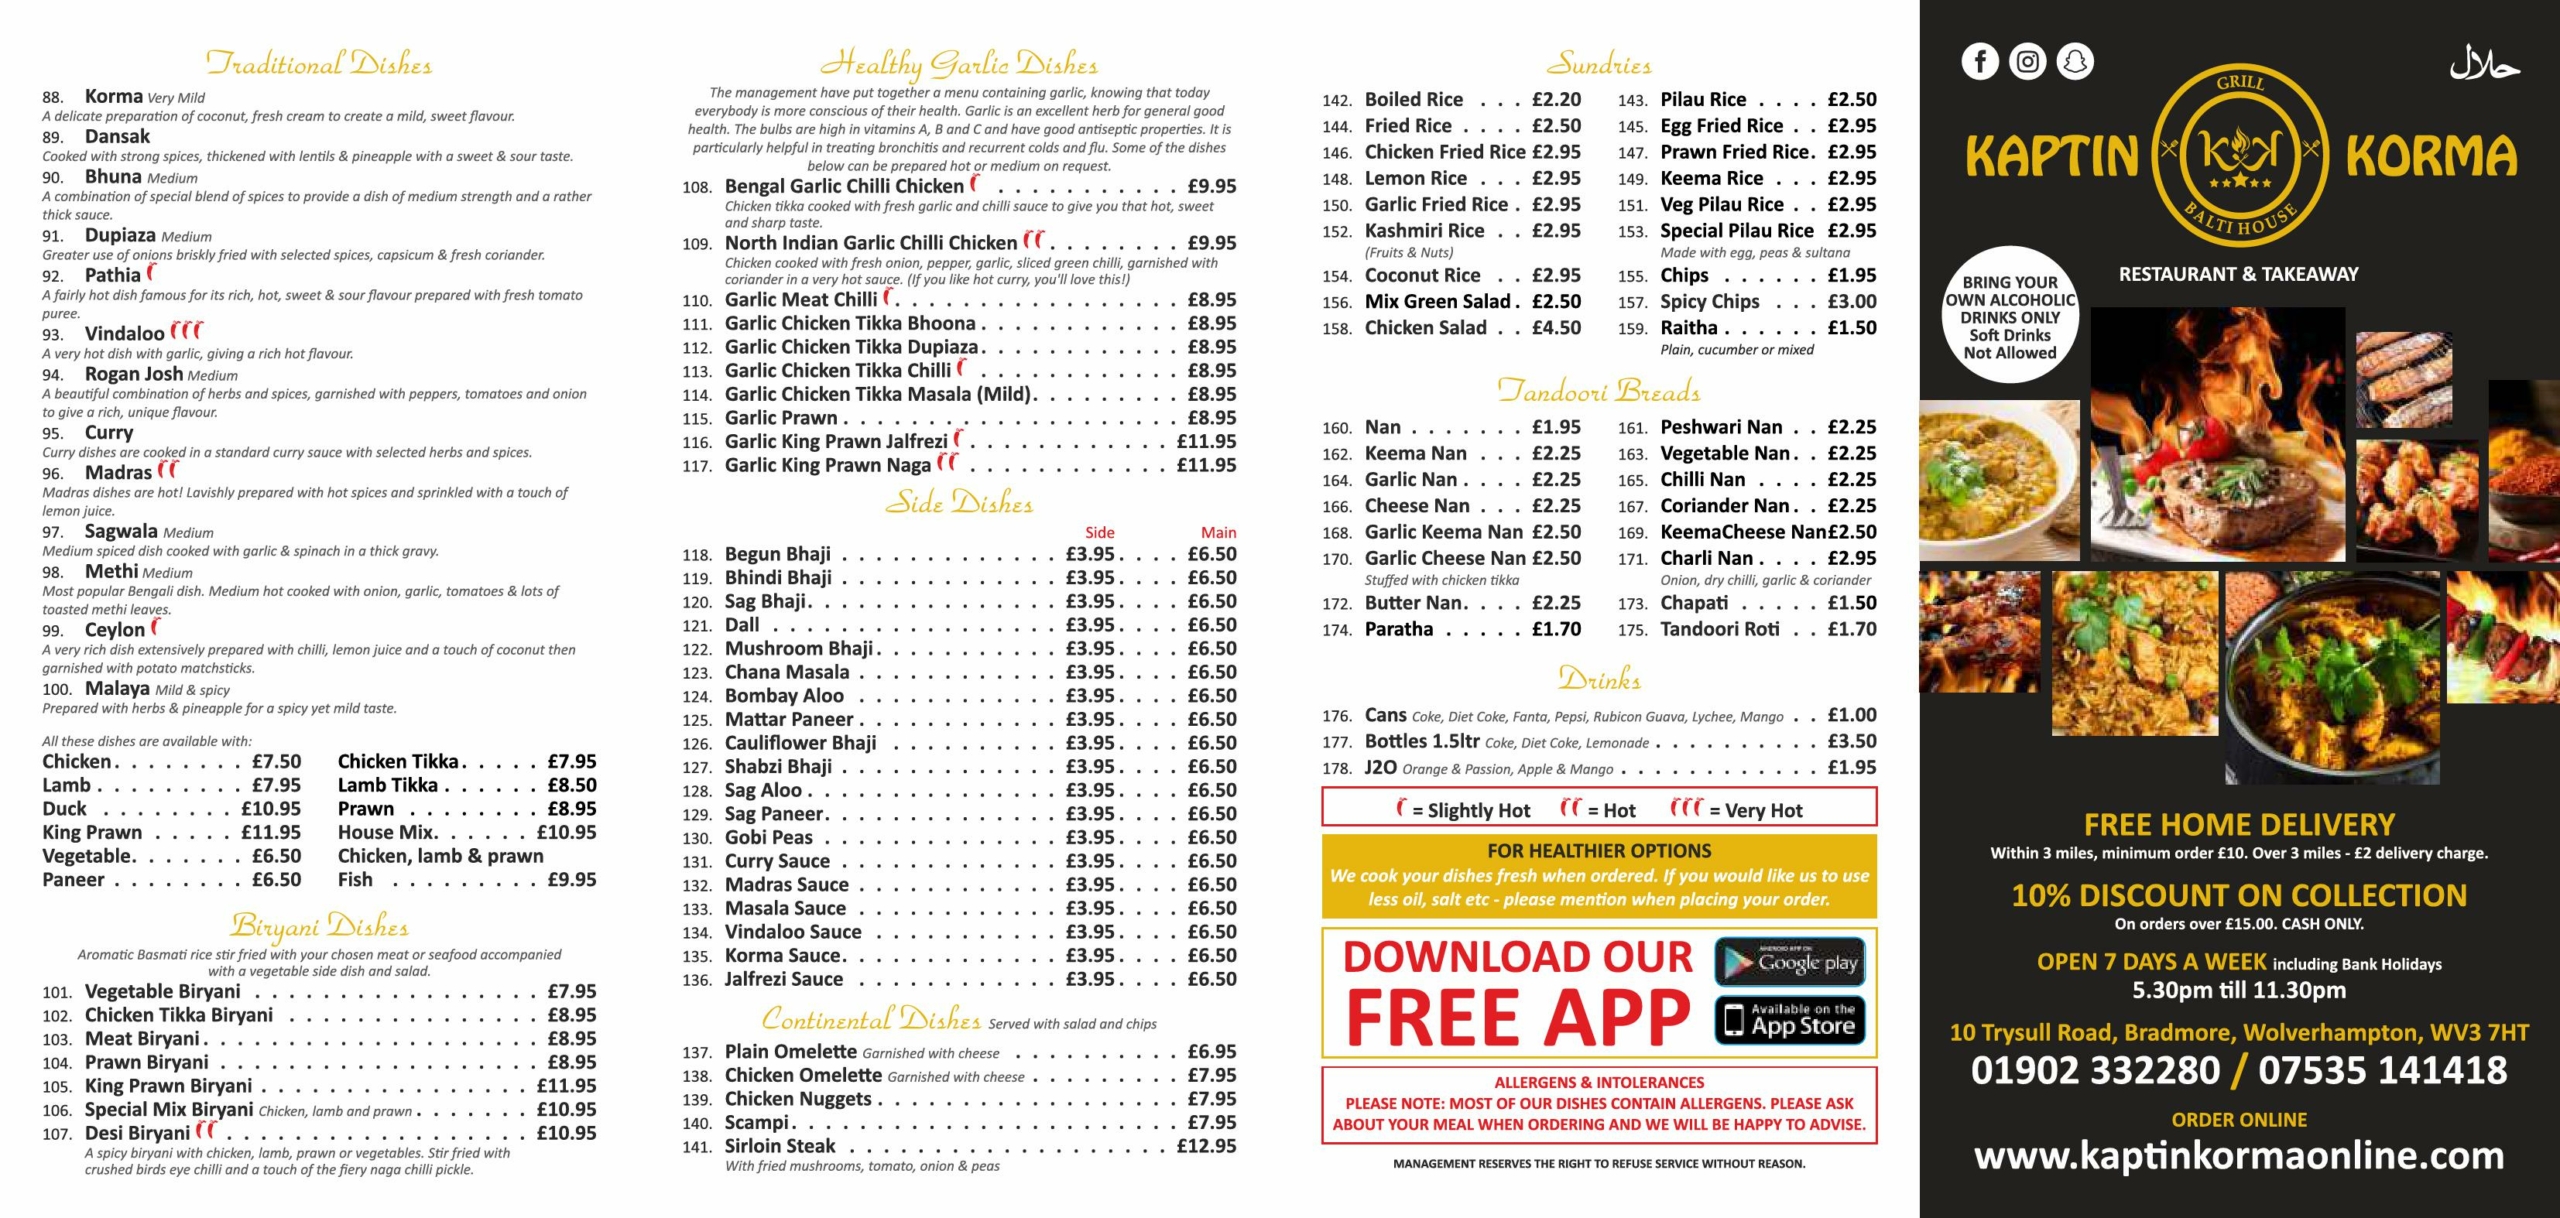 Kaptin Korma Indian Restaurant Takeaway Wolverhampton - main menu